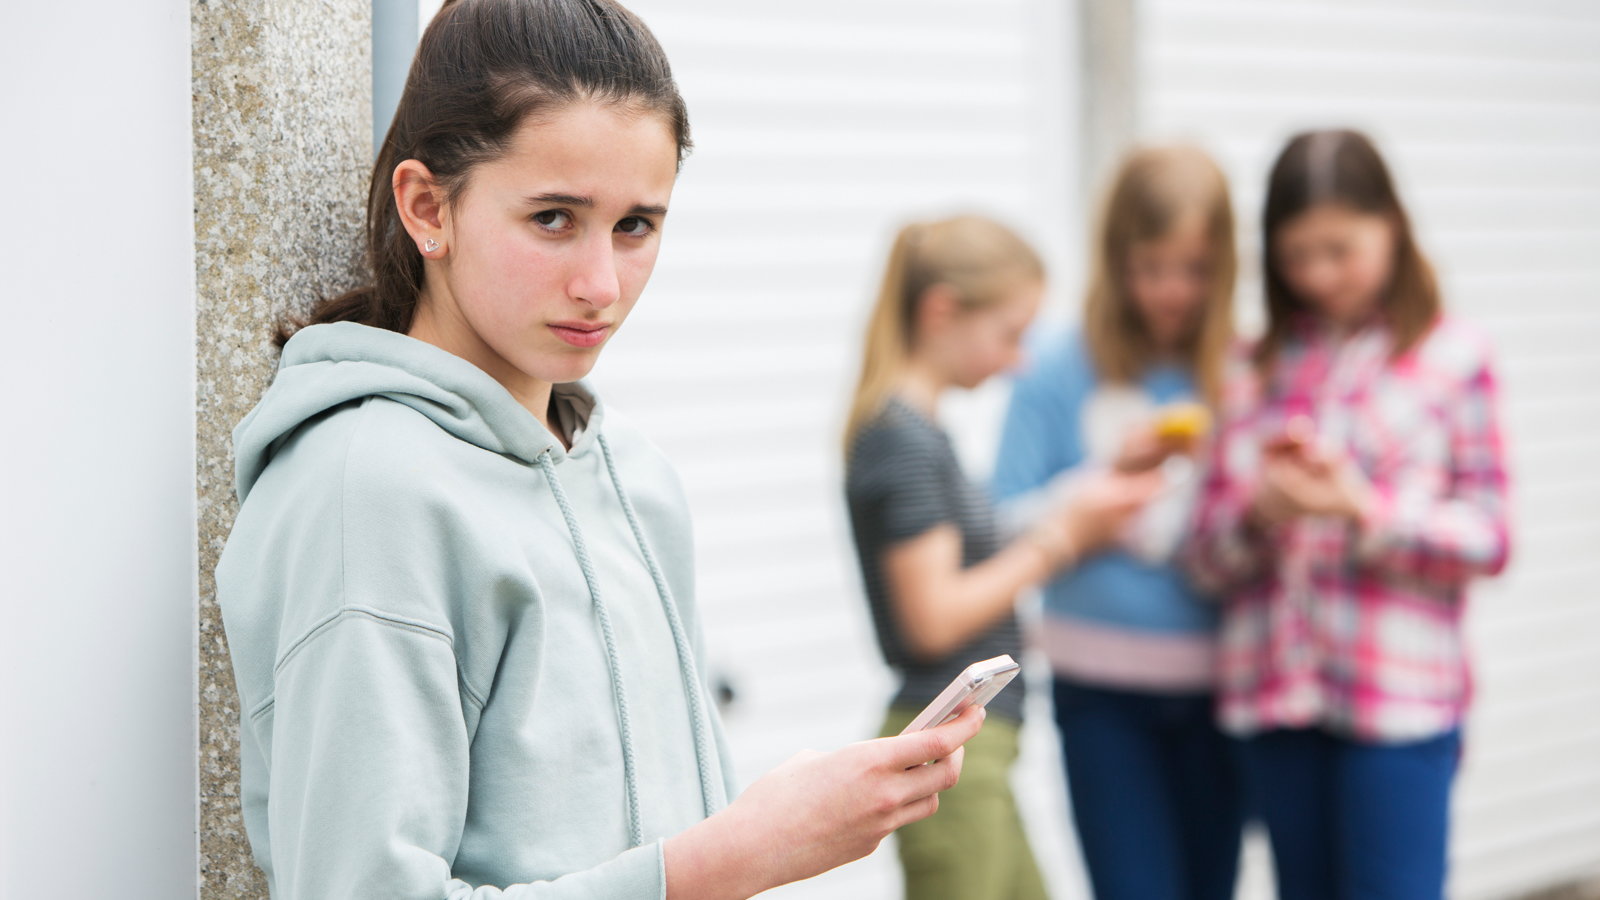 teens sending bullying texts